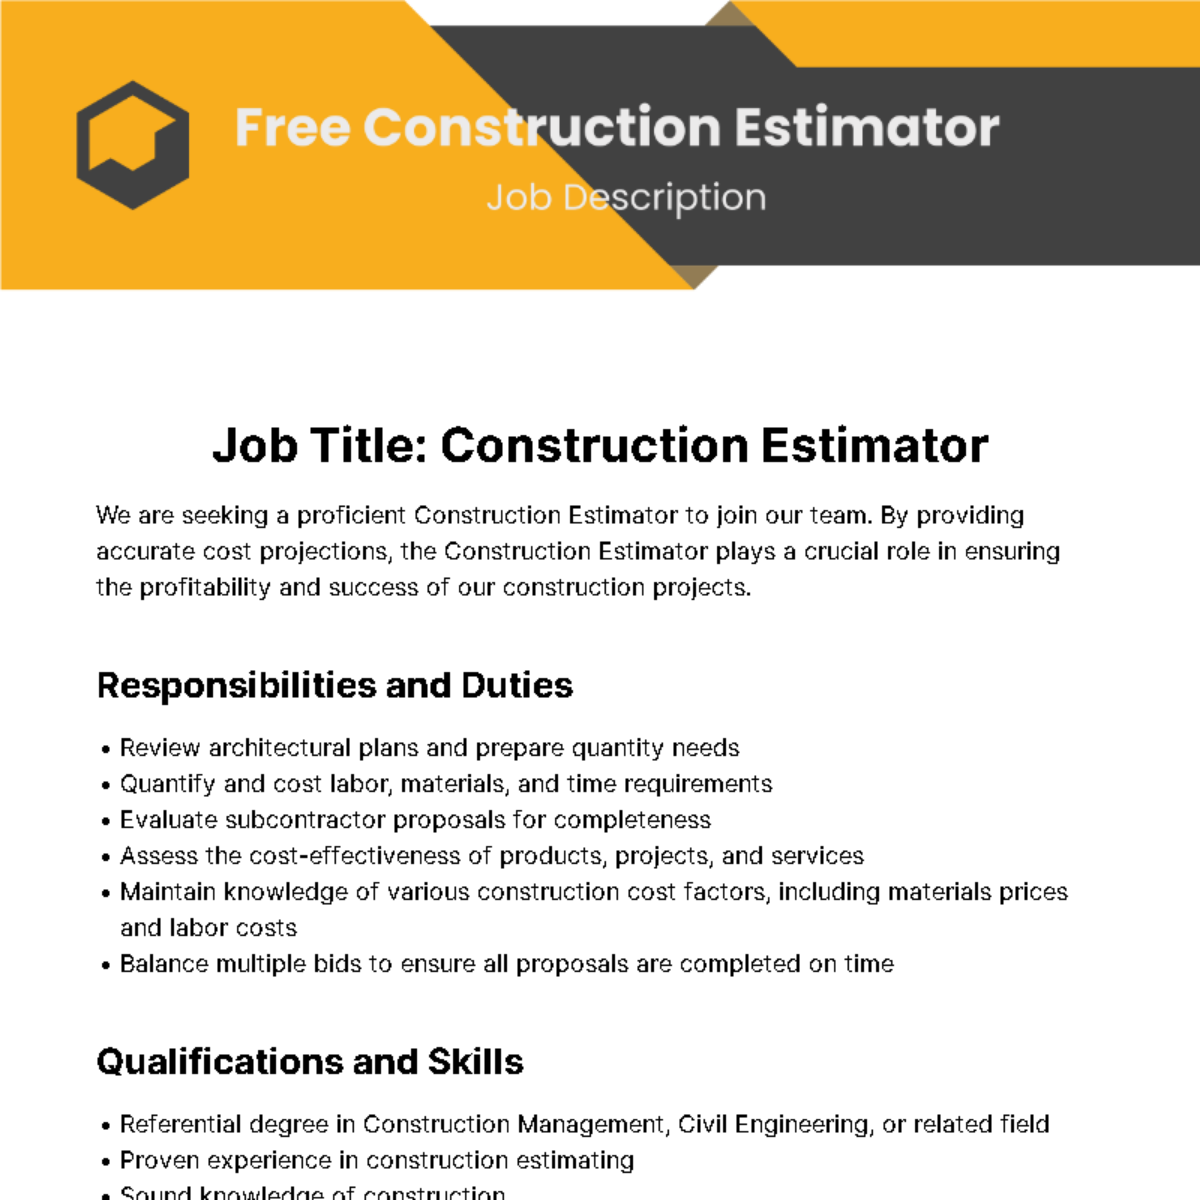 Free Construction Estimator Job Description Template